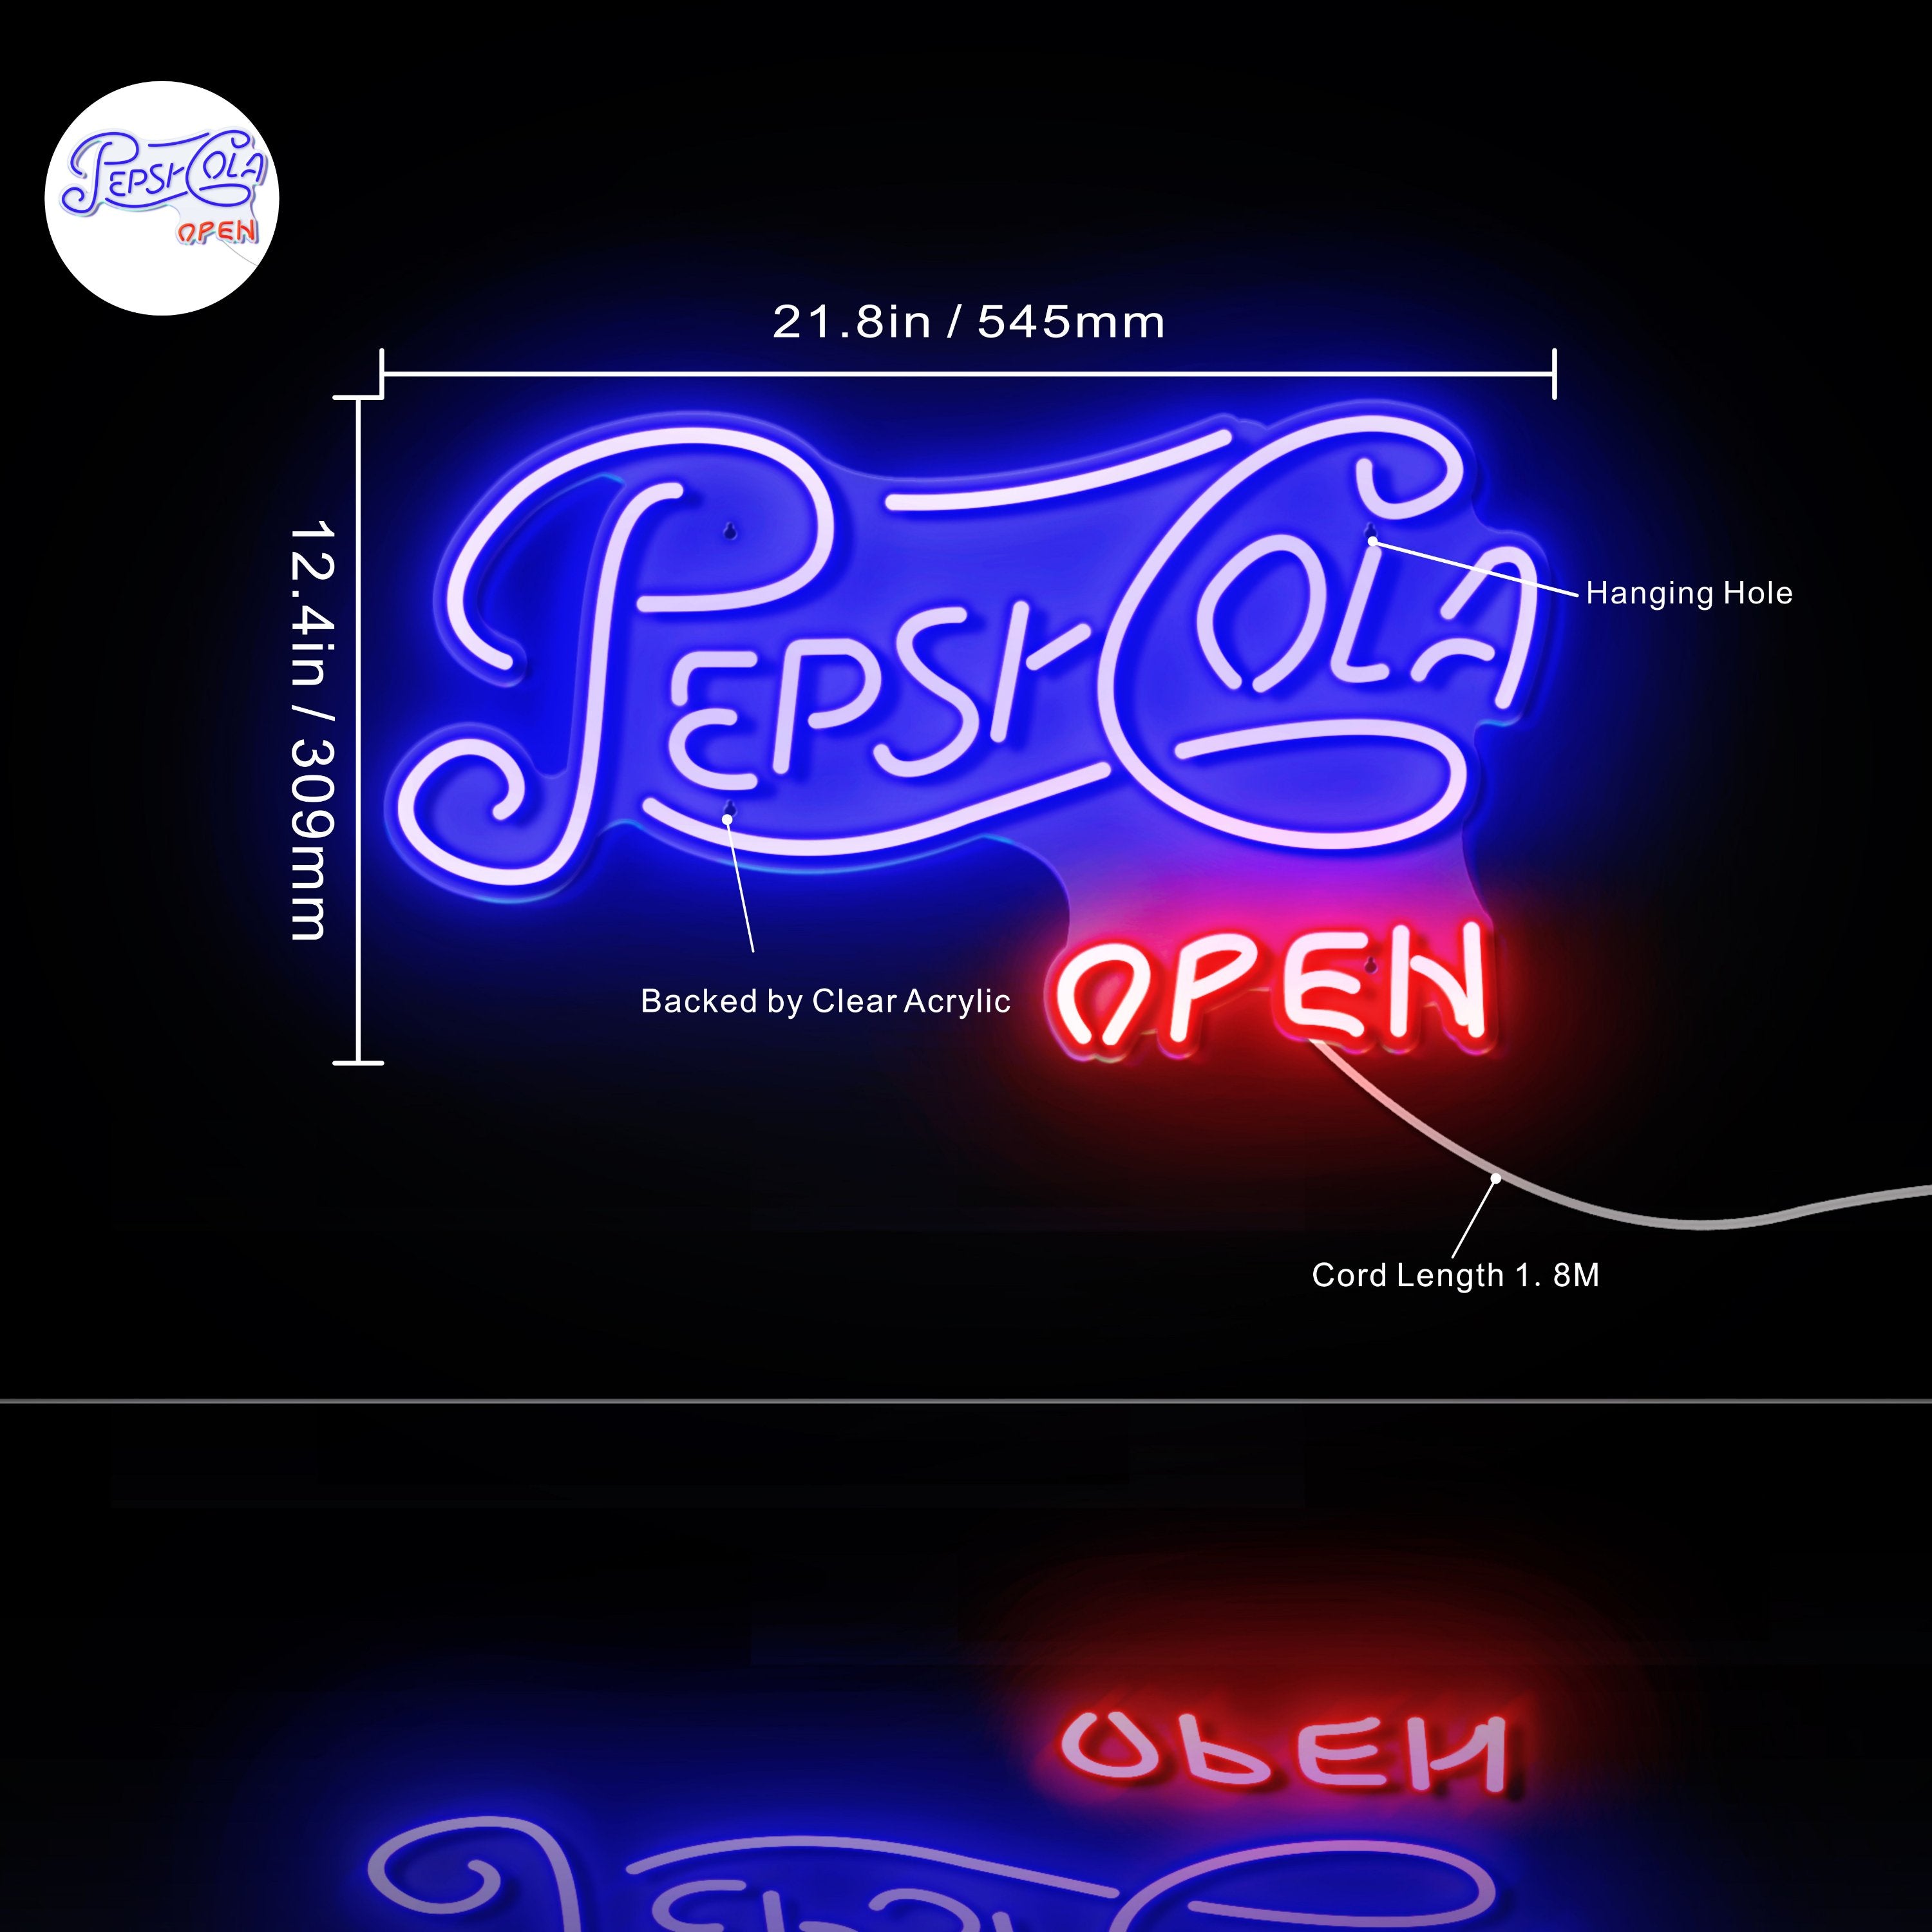 Pepsi Cola Open Sign Large Flex Neon LED Sign